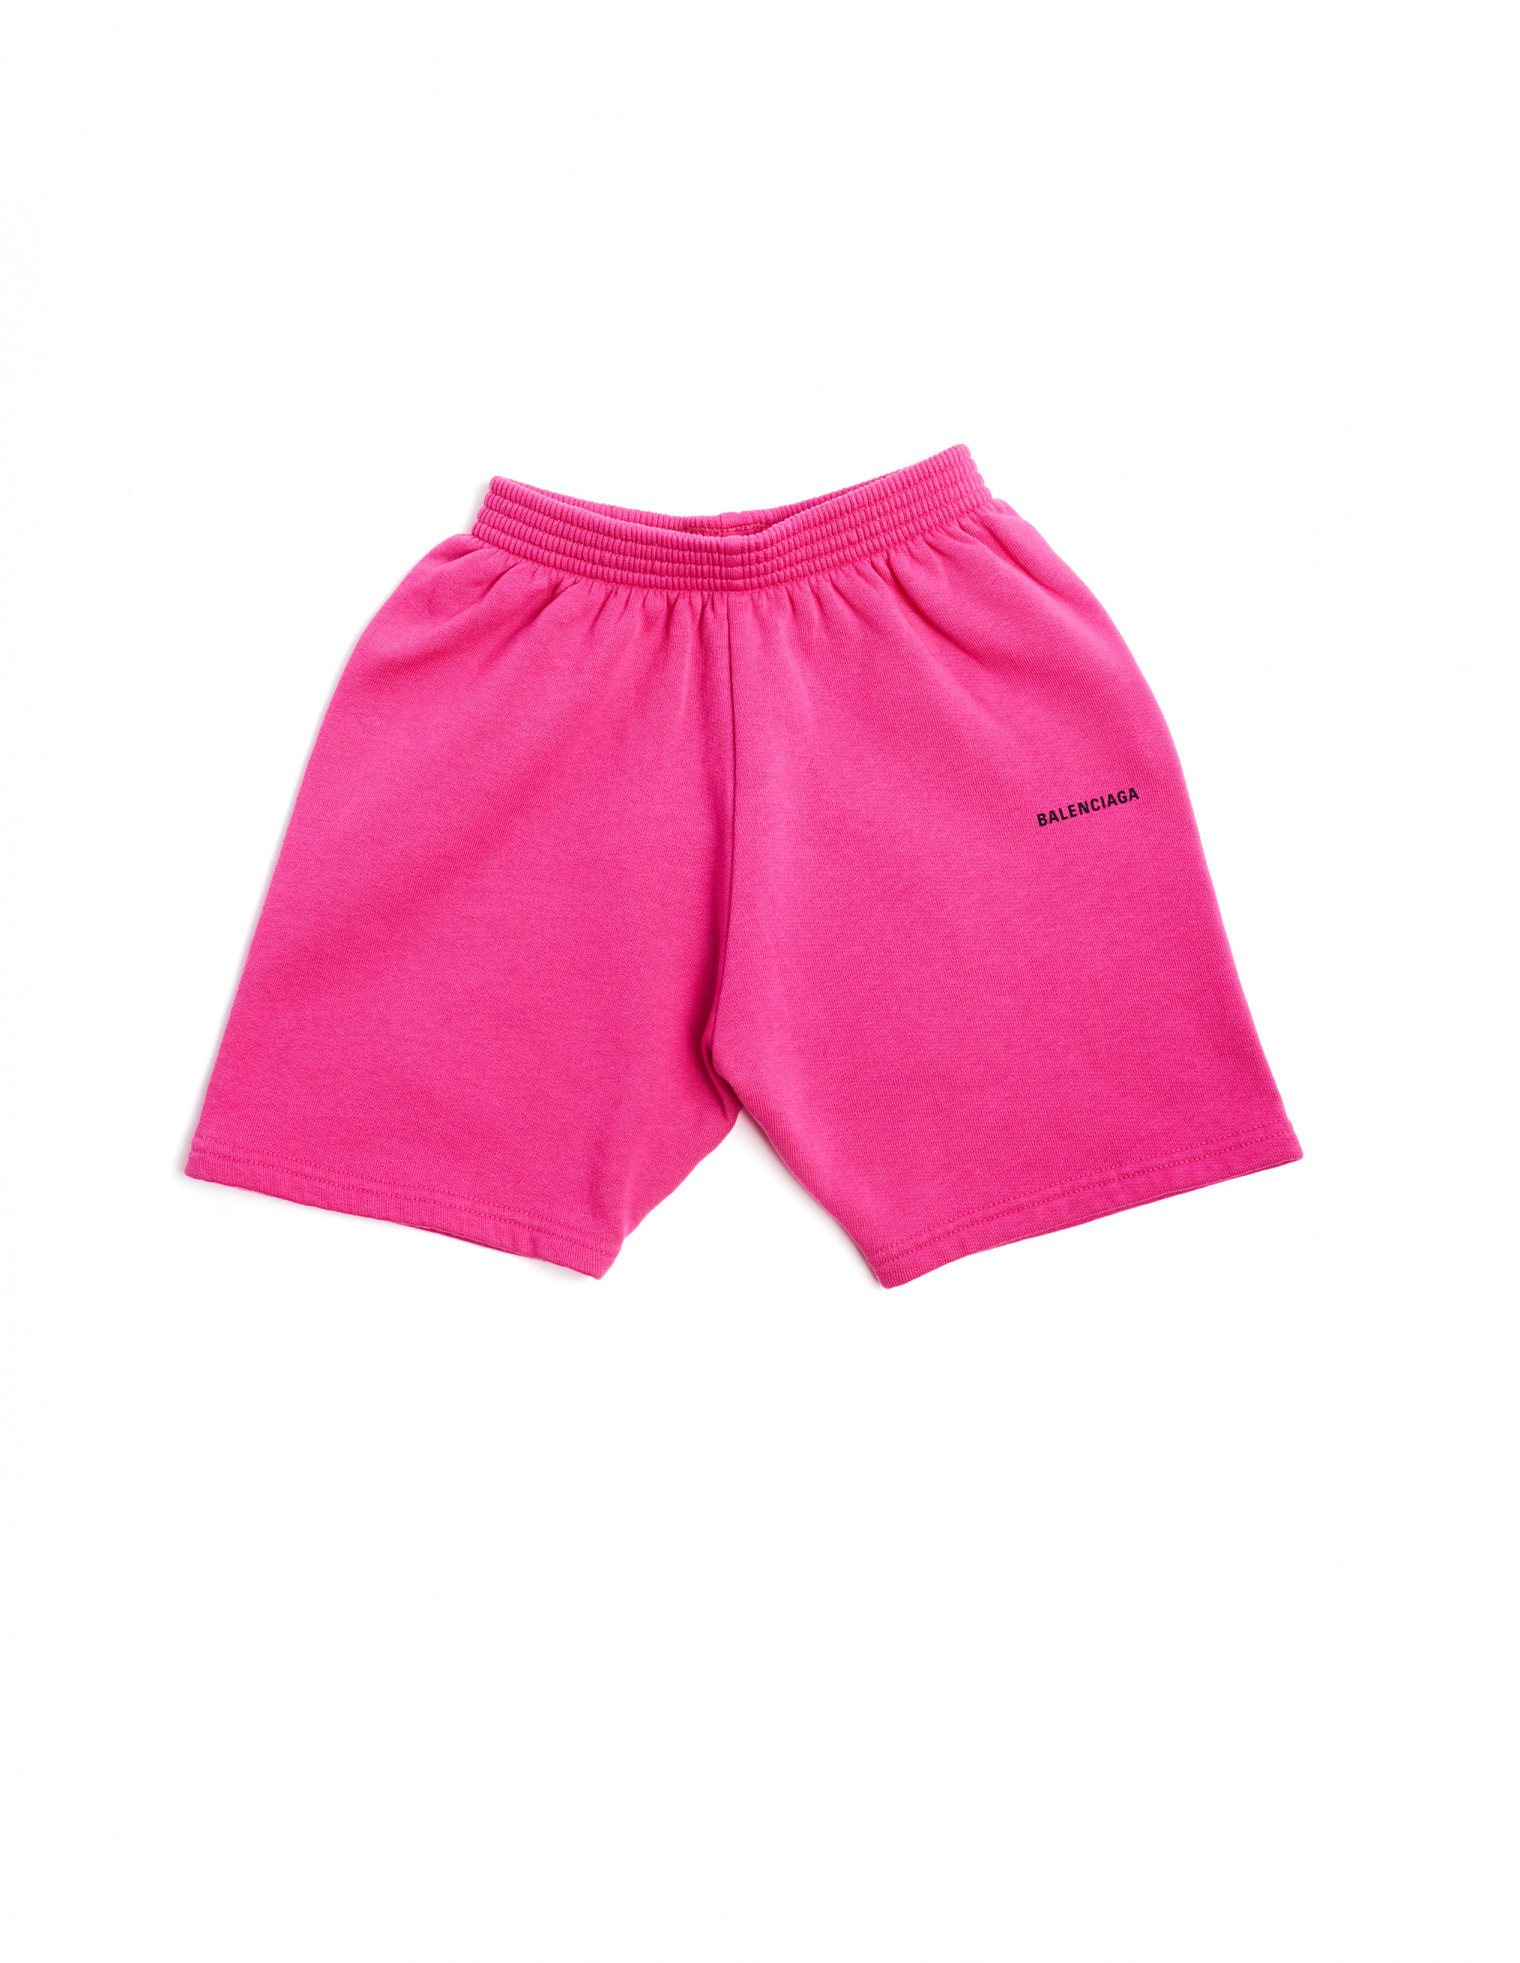 Balenciaga Kids Pink Cotton Shorts